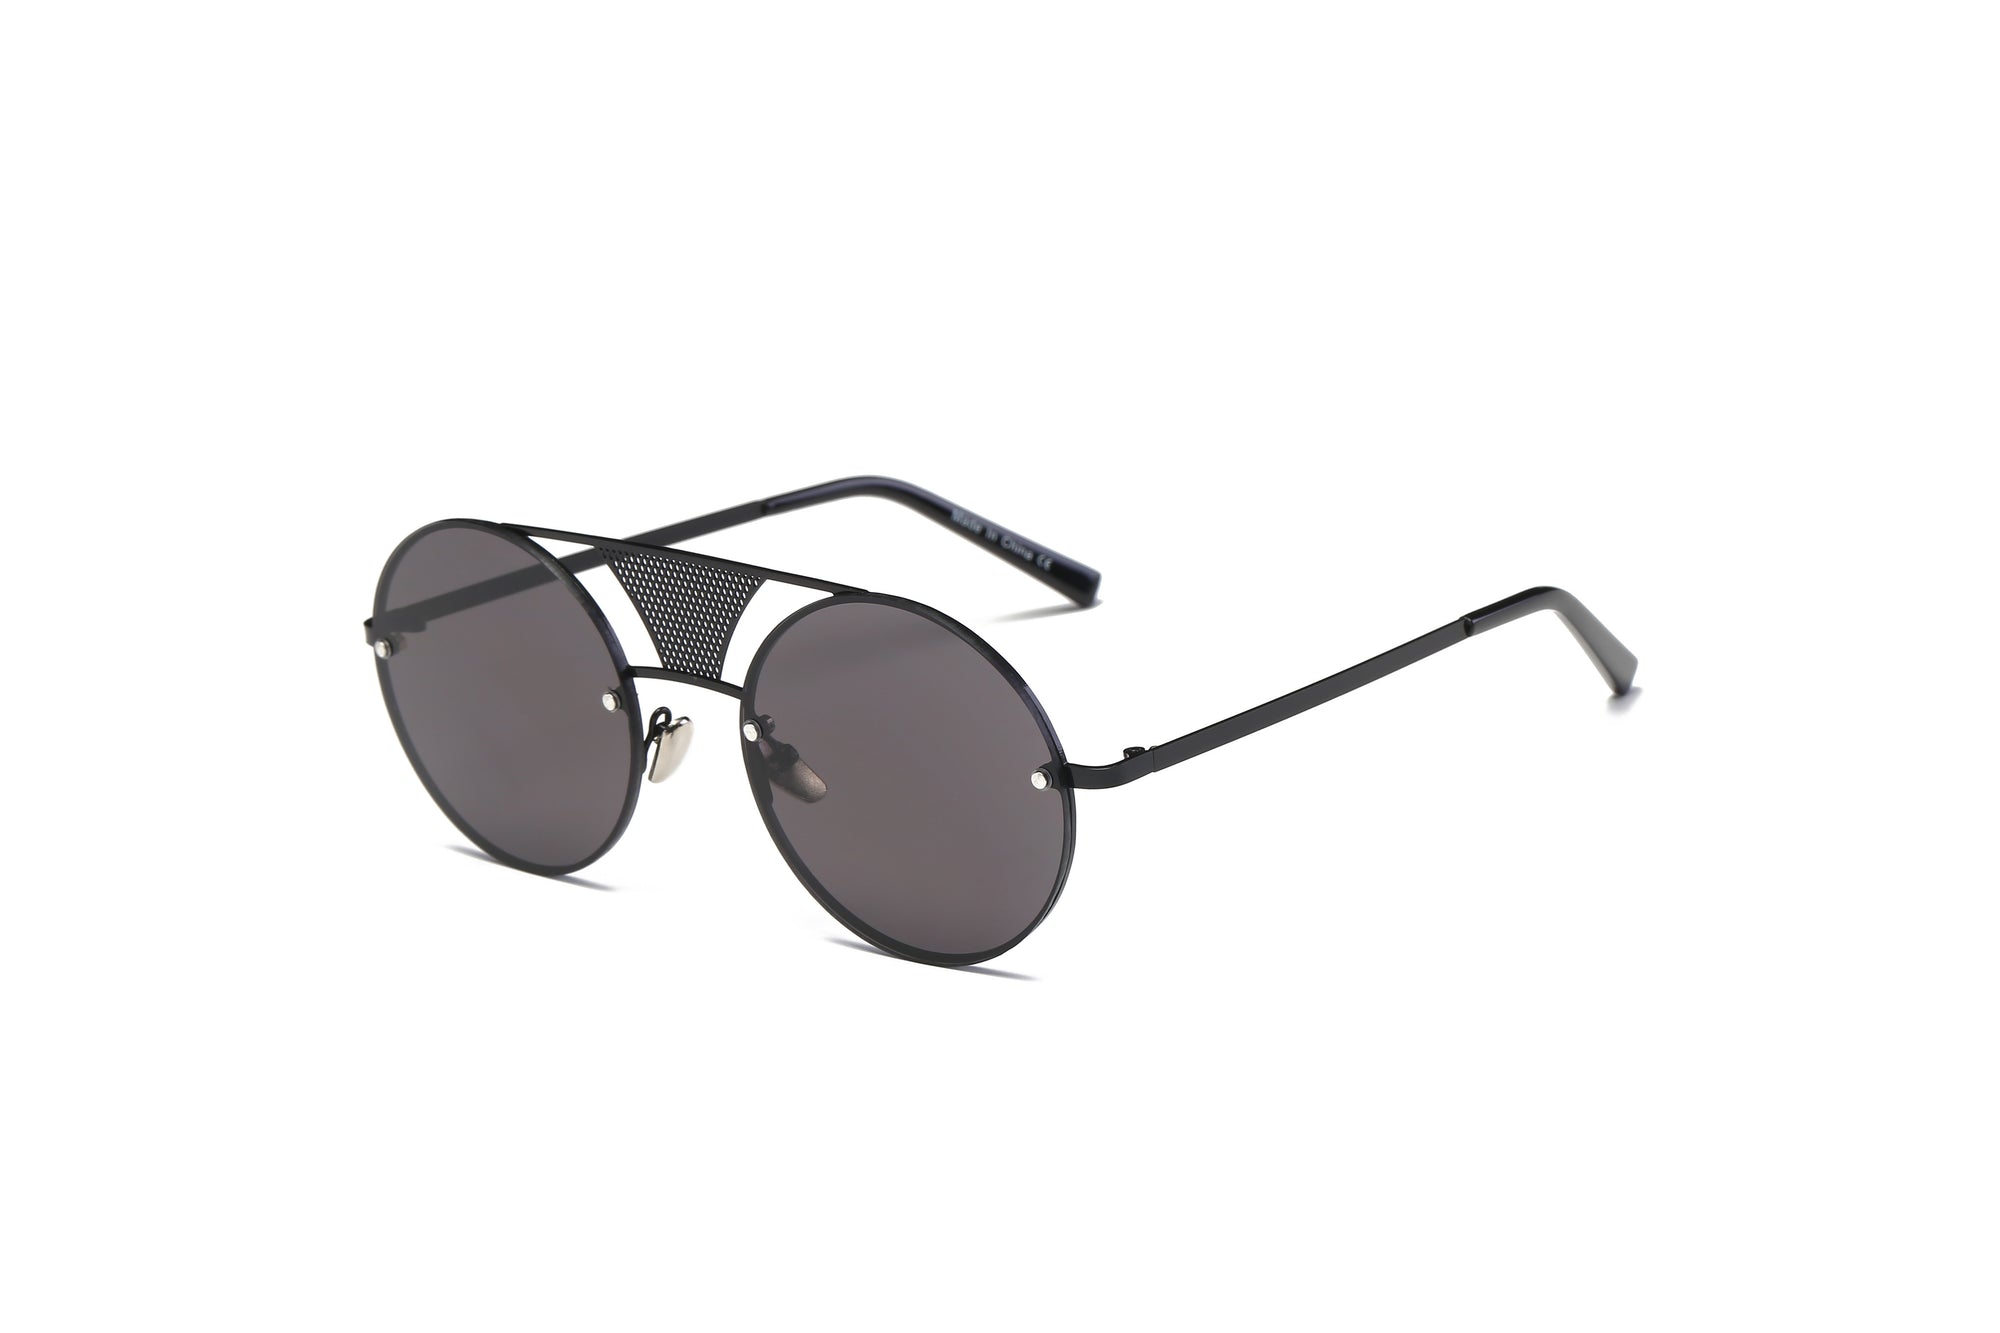 S2012 Modern Fashion Round Flat Divider Bridge Sunglasses Iris